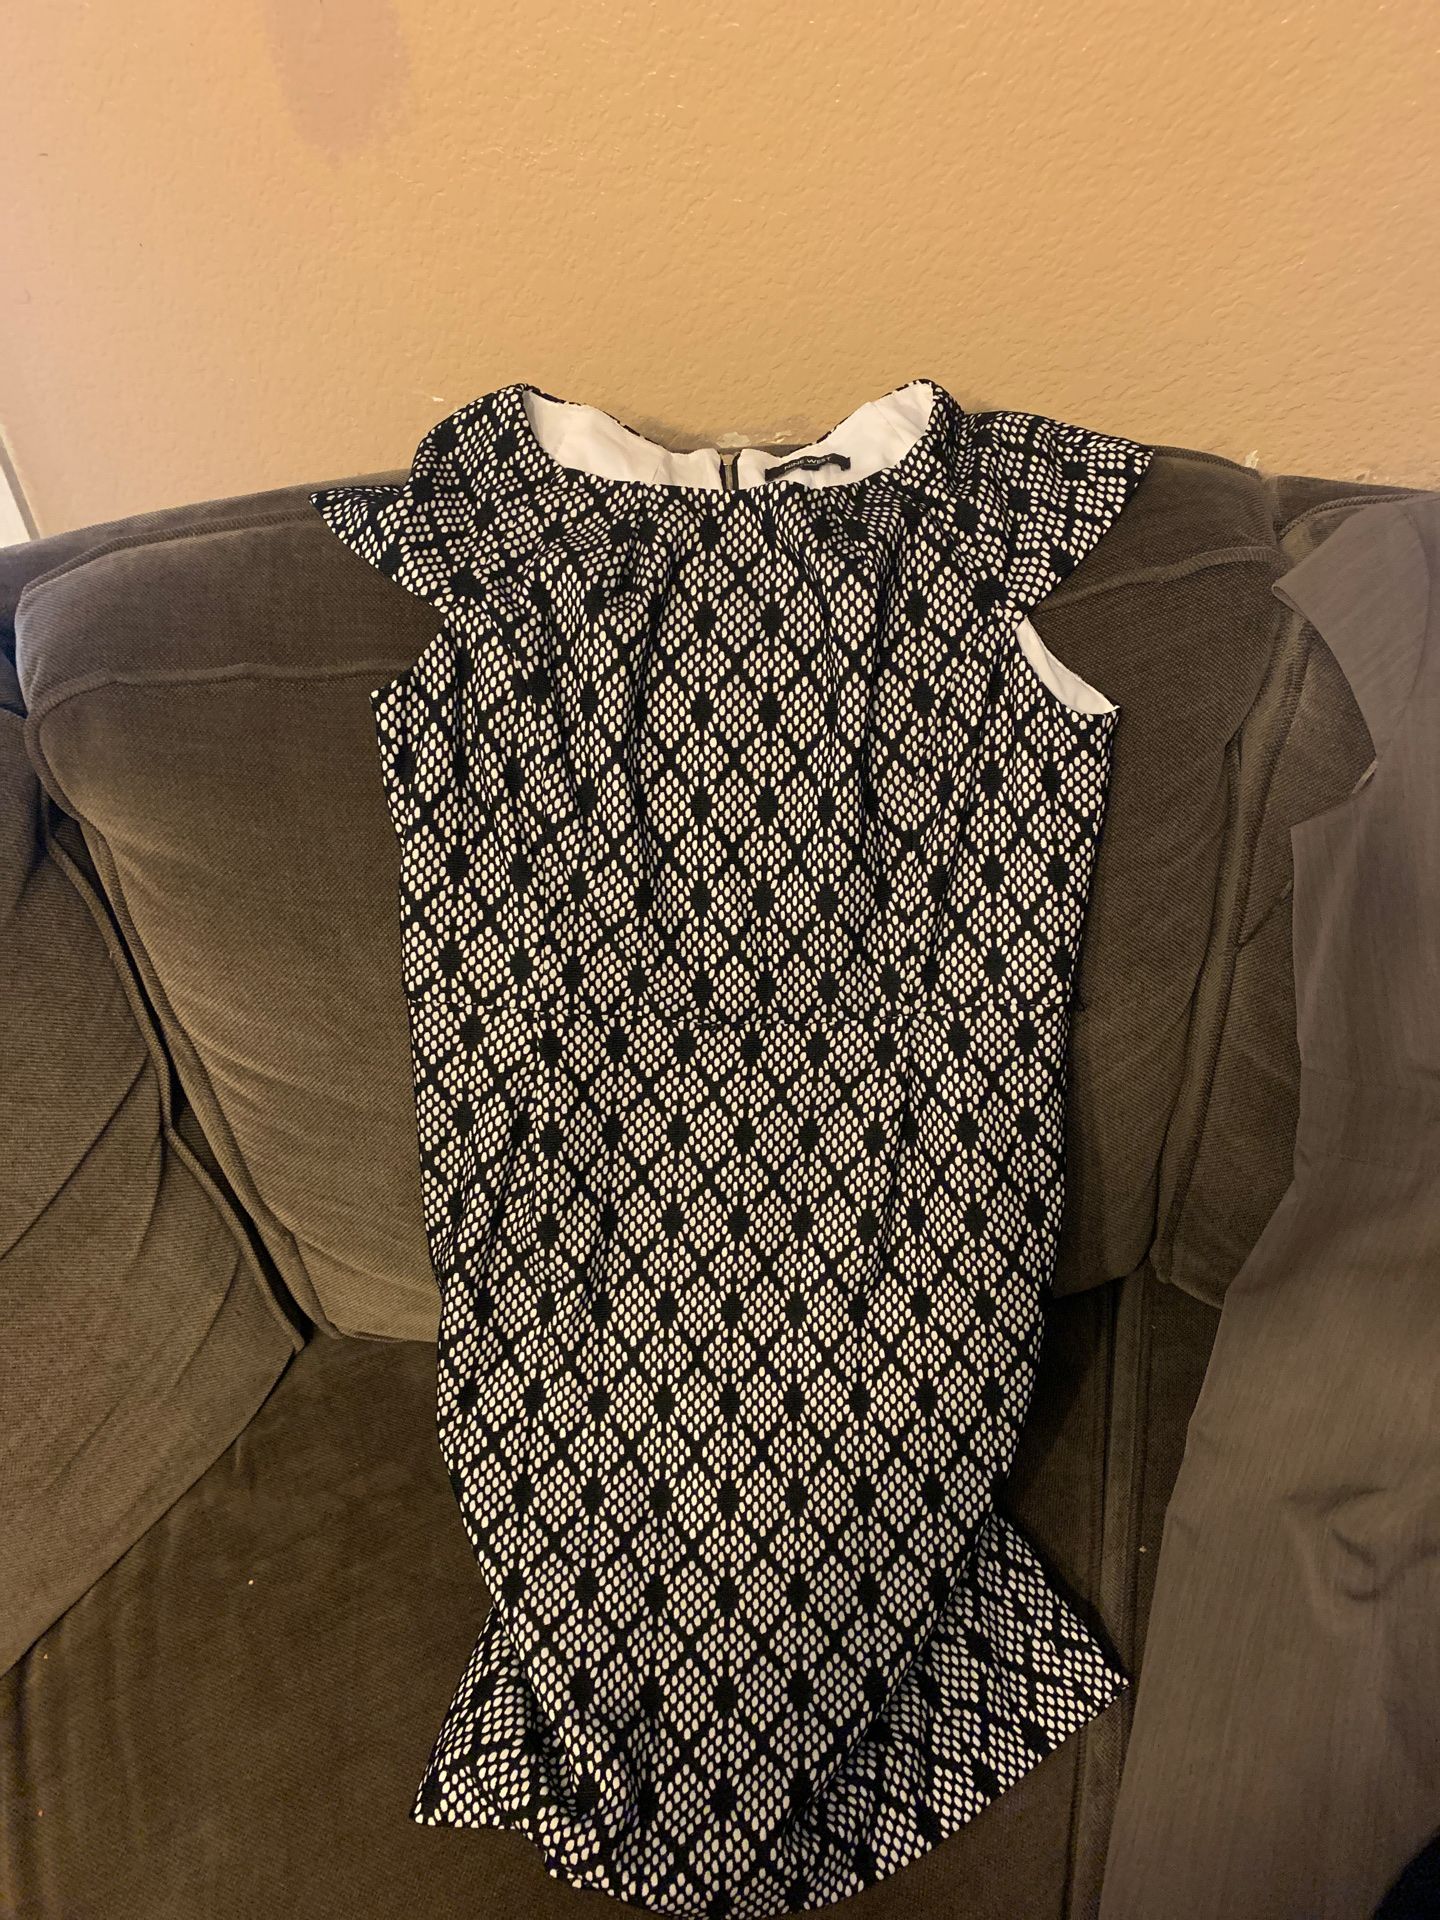 Used women’s dresses. $4 each